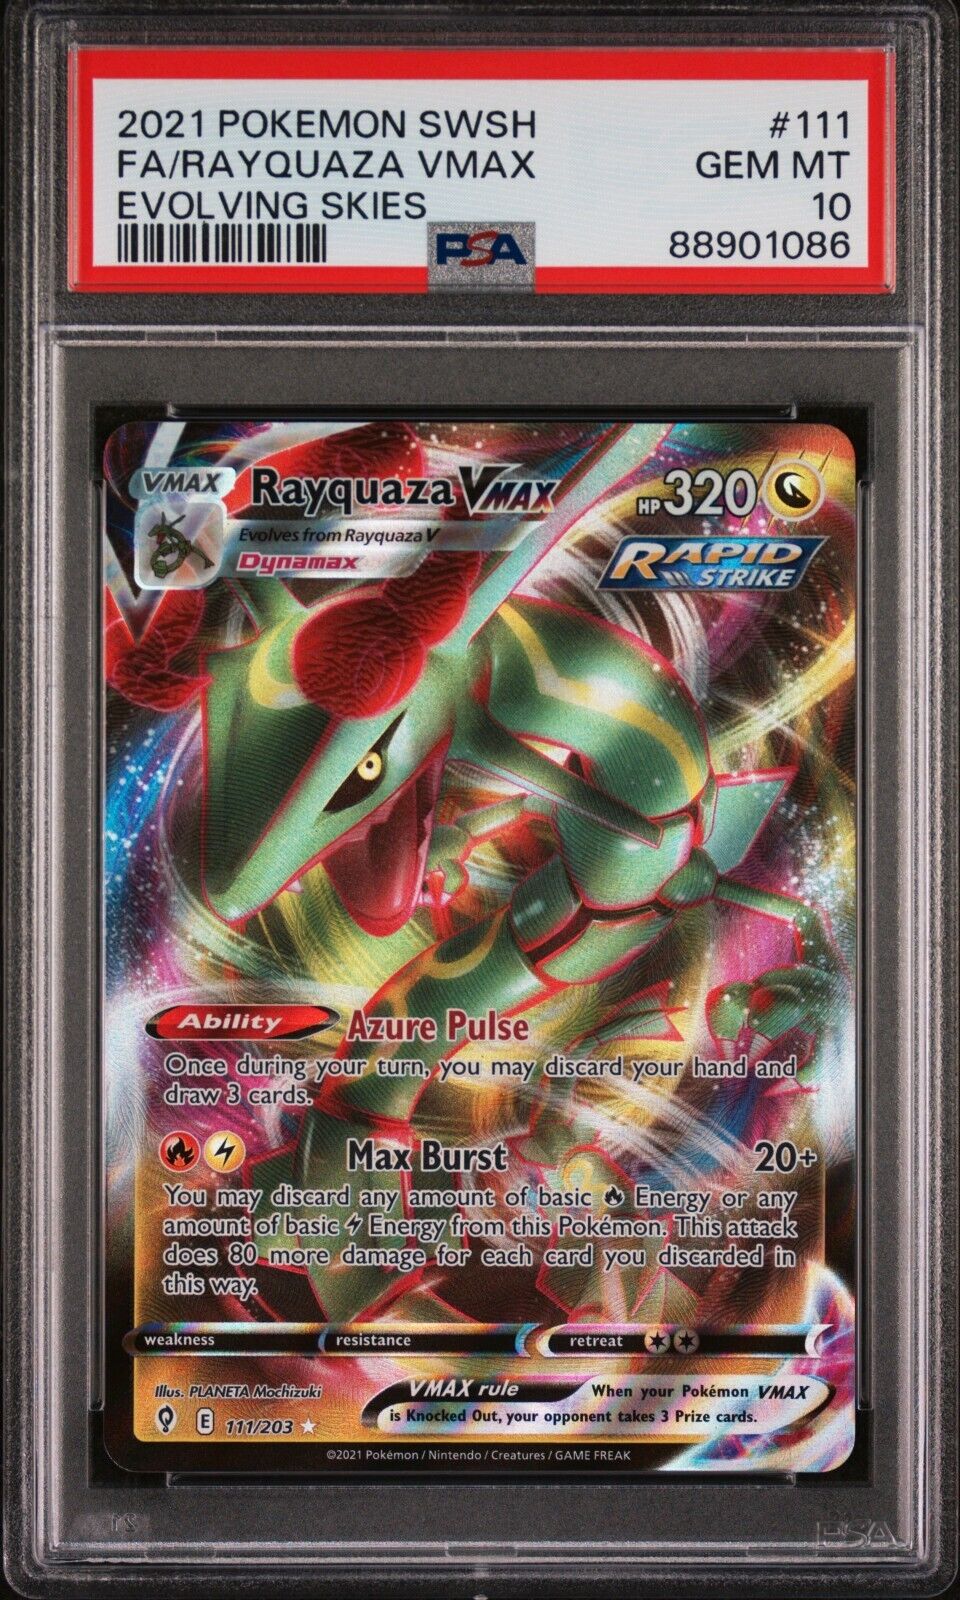 PSA 10 Rayquaza VMAX Full Art 2021 Pokemon Card 111/203 Evolving Skies